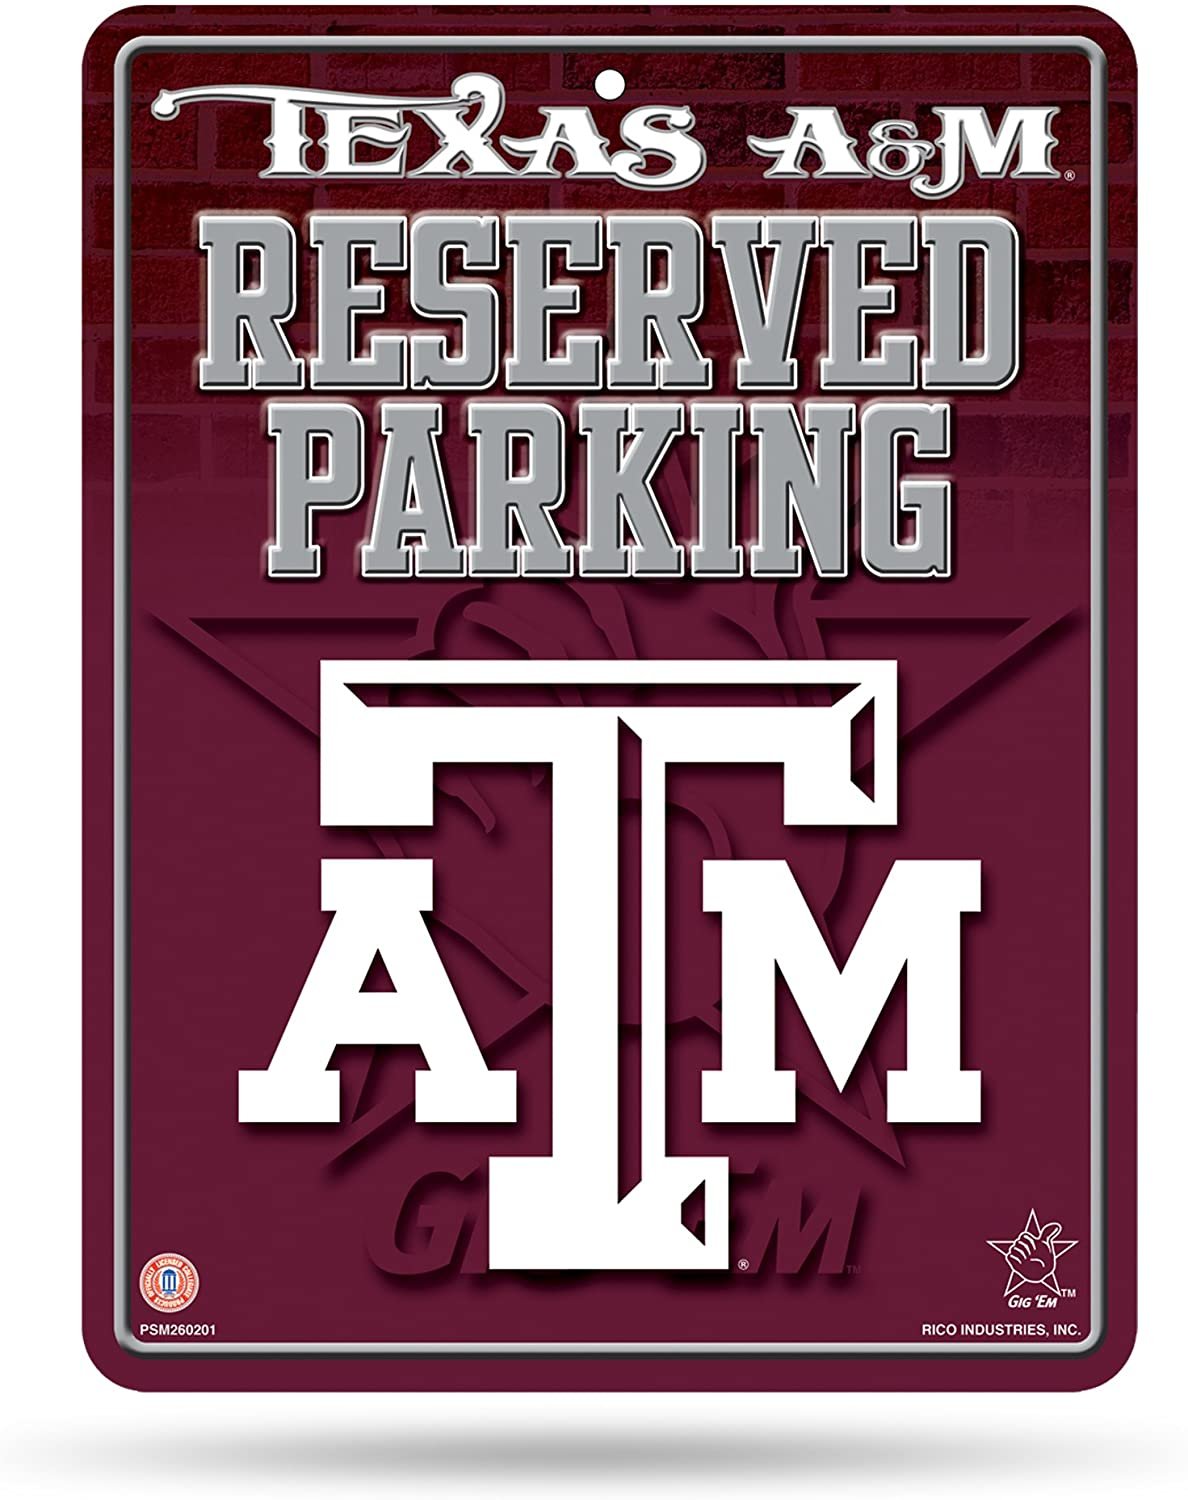 Texas A&M Aggies Metal Parking Sign